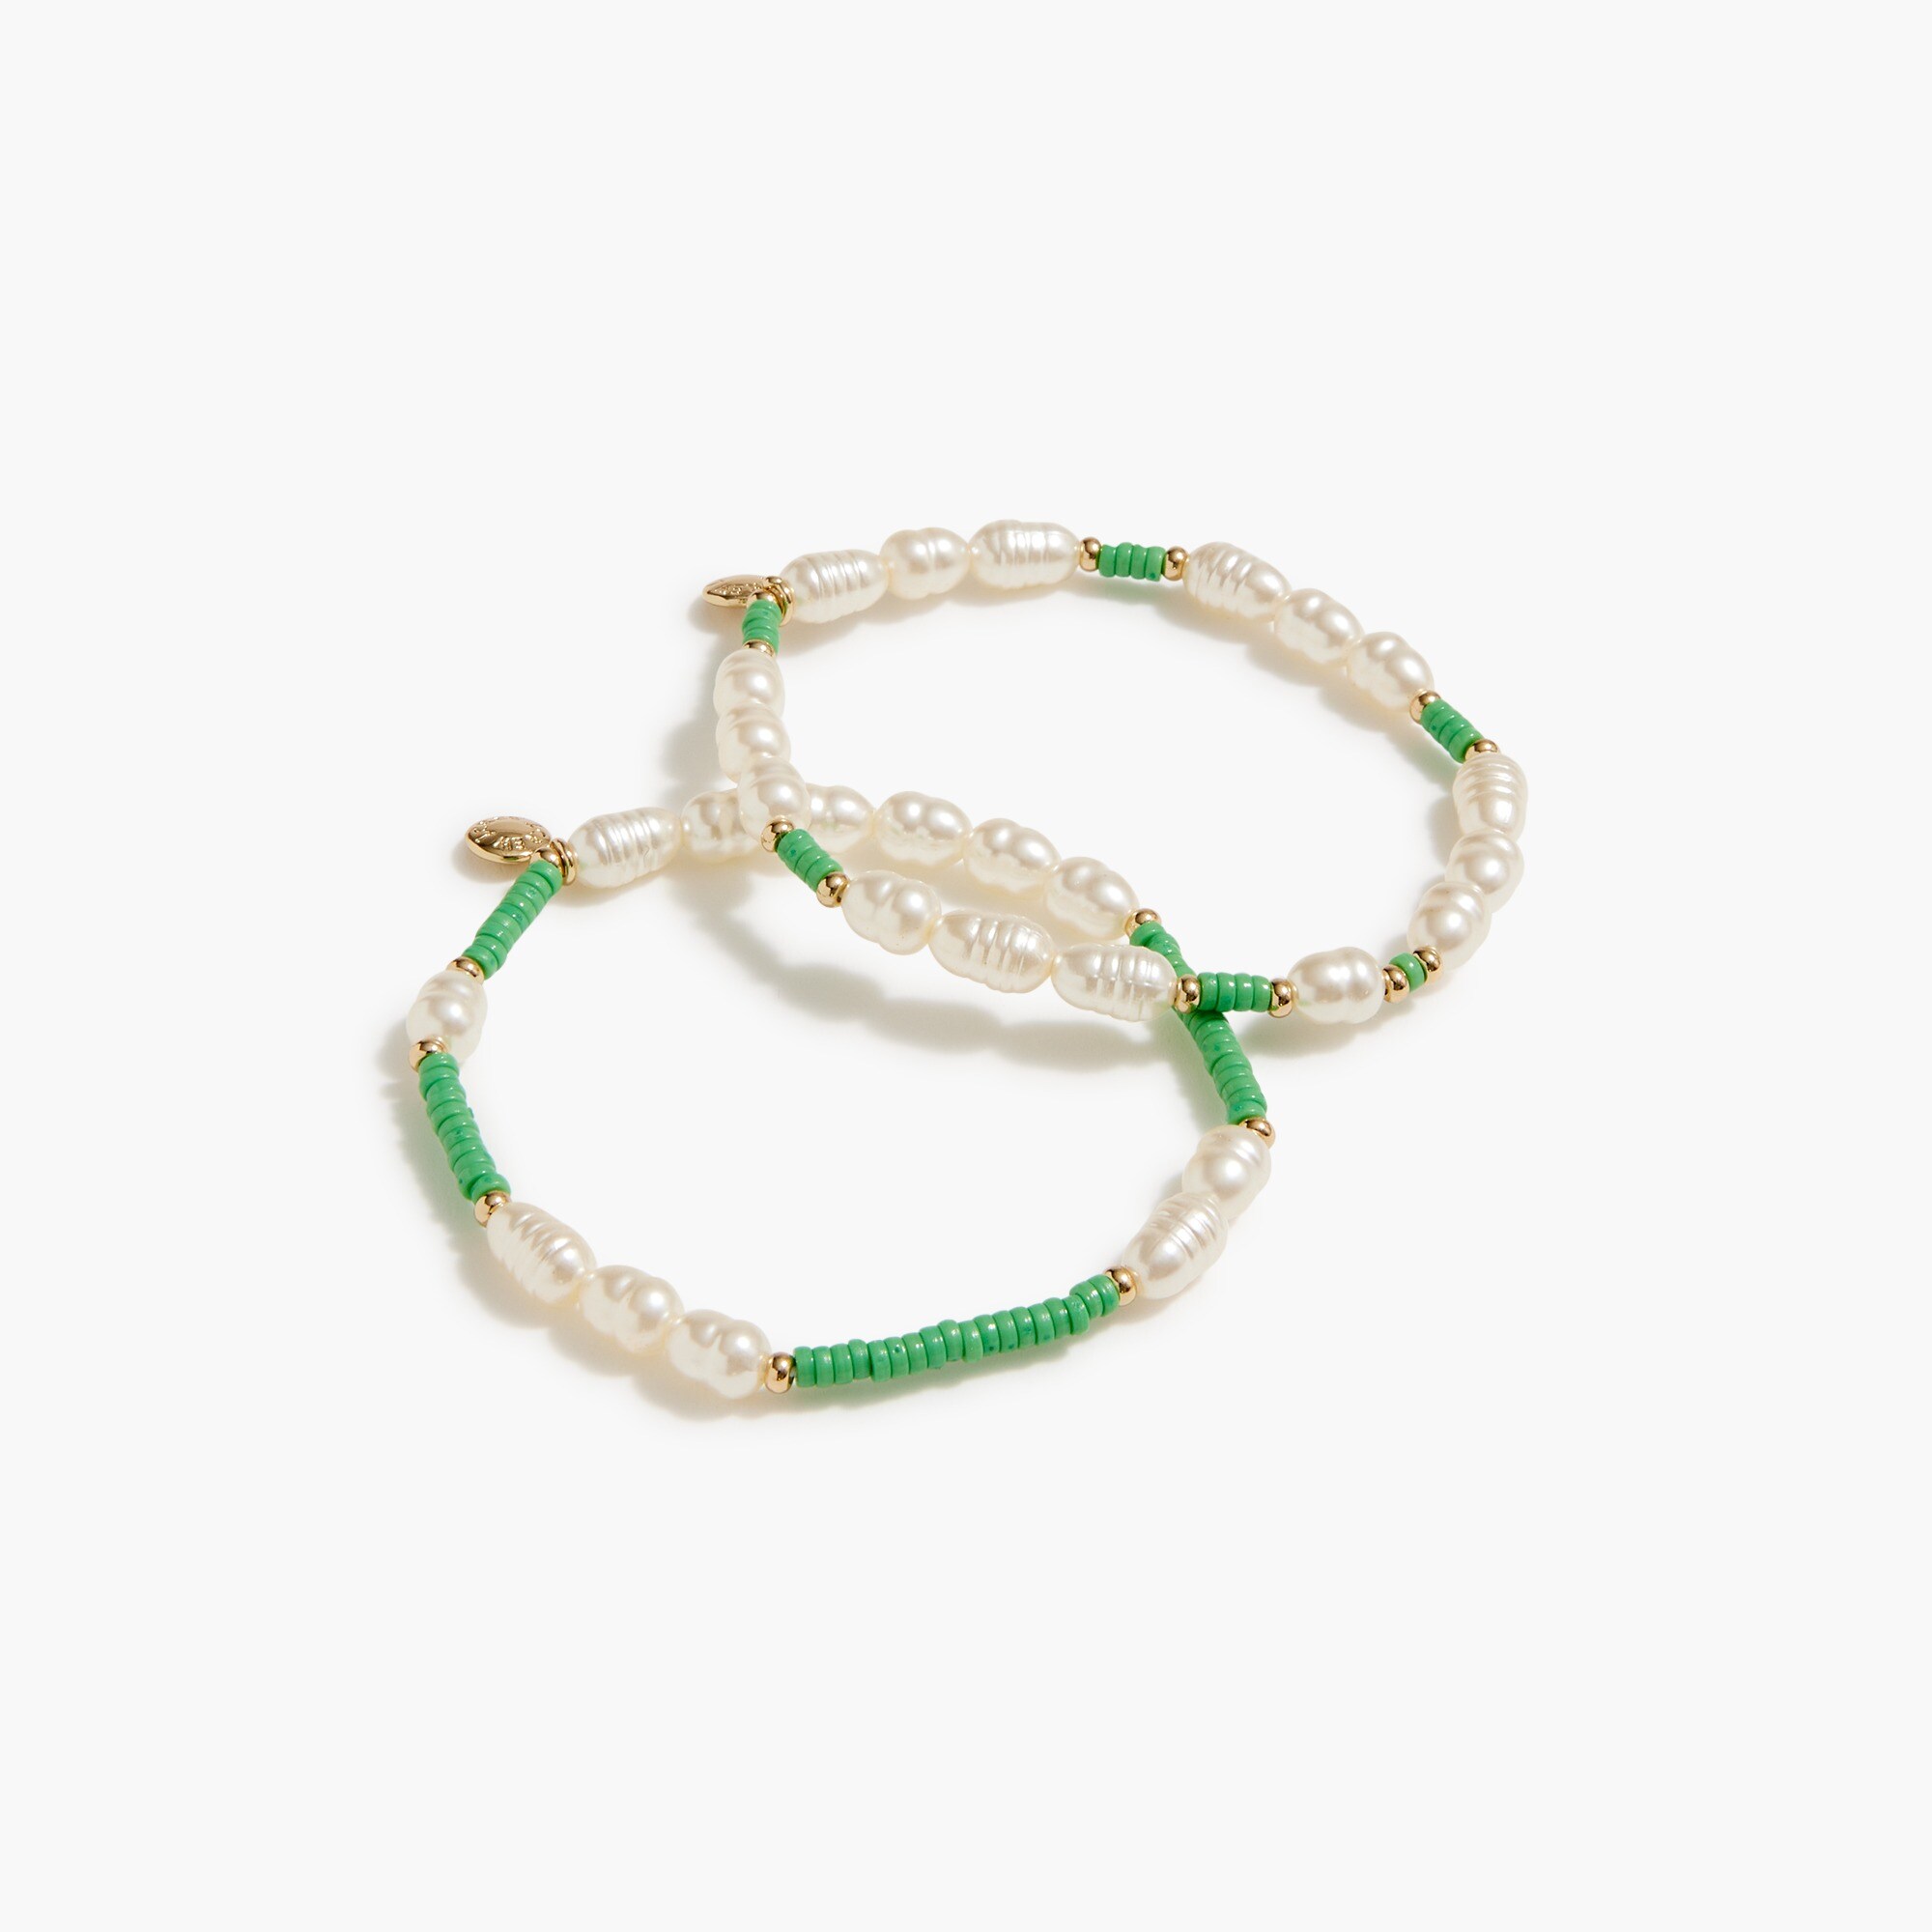 Jcrew Pearl and bead bracelets set